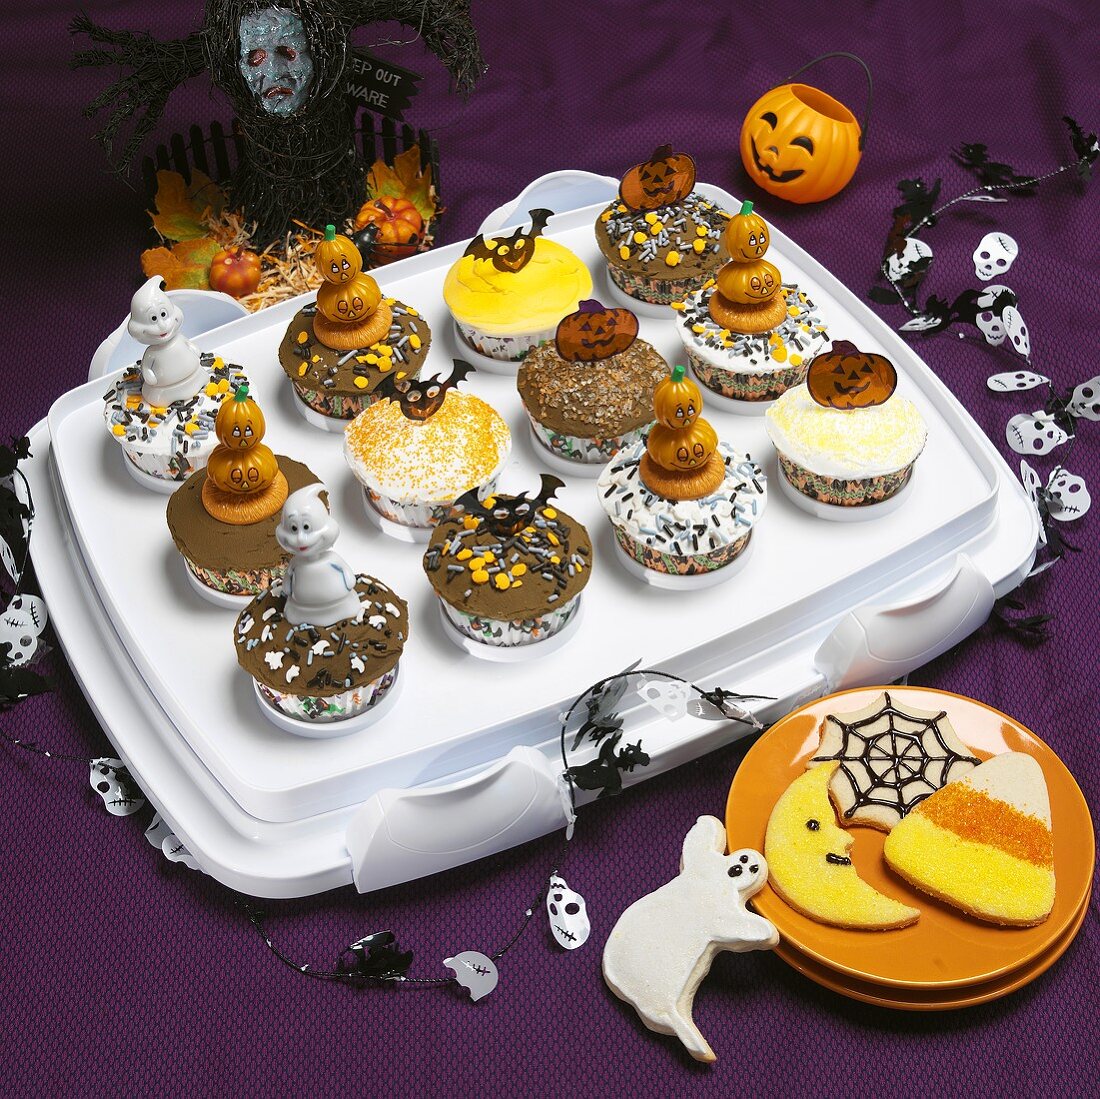 Festive Halloween Cupcakes and Cookies; Halloween Decorations